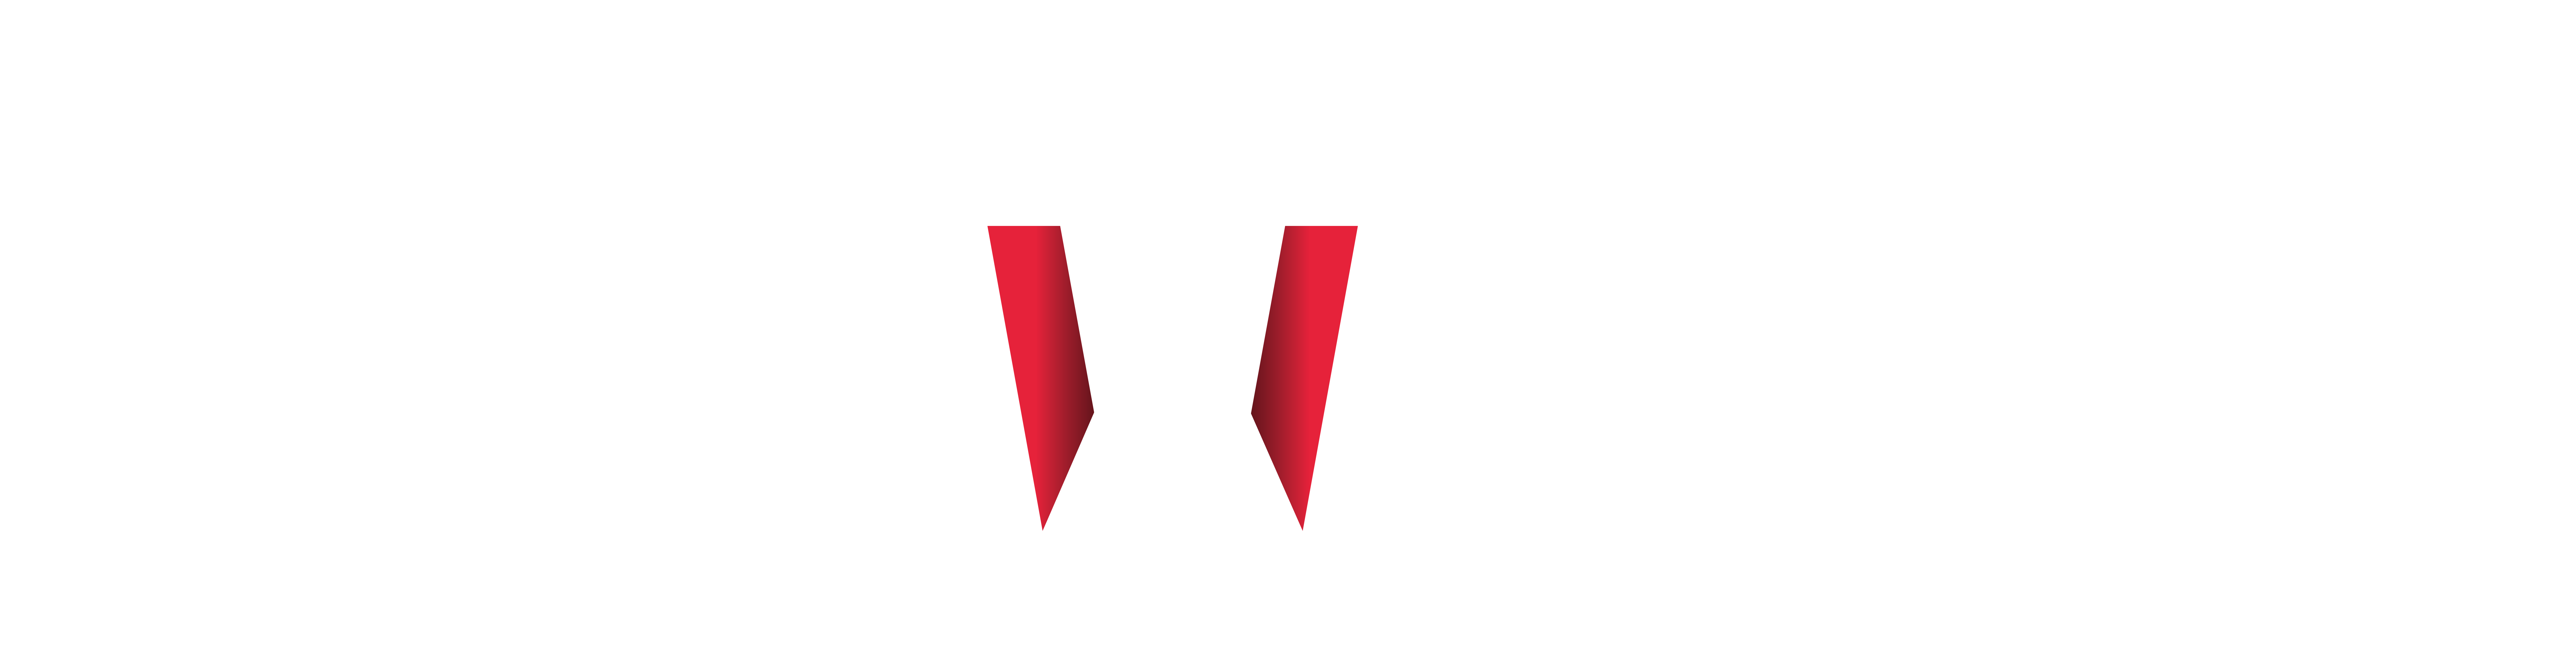 Logo Crow Tech Png